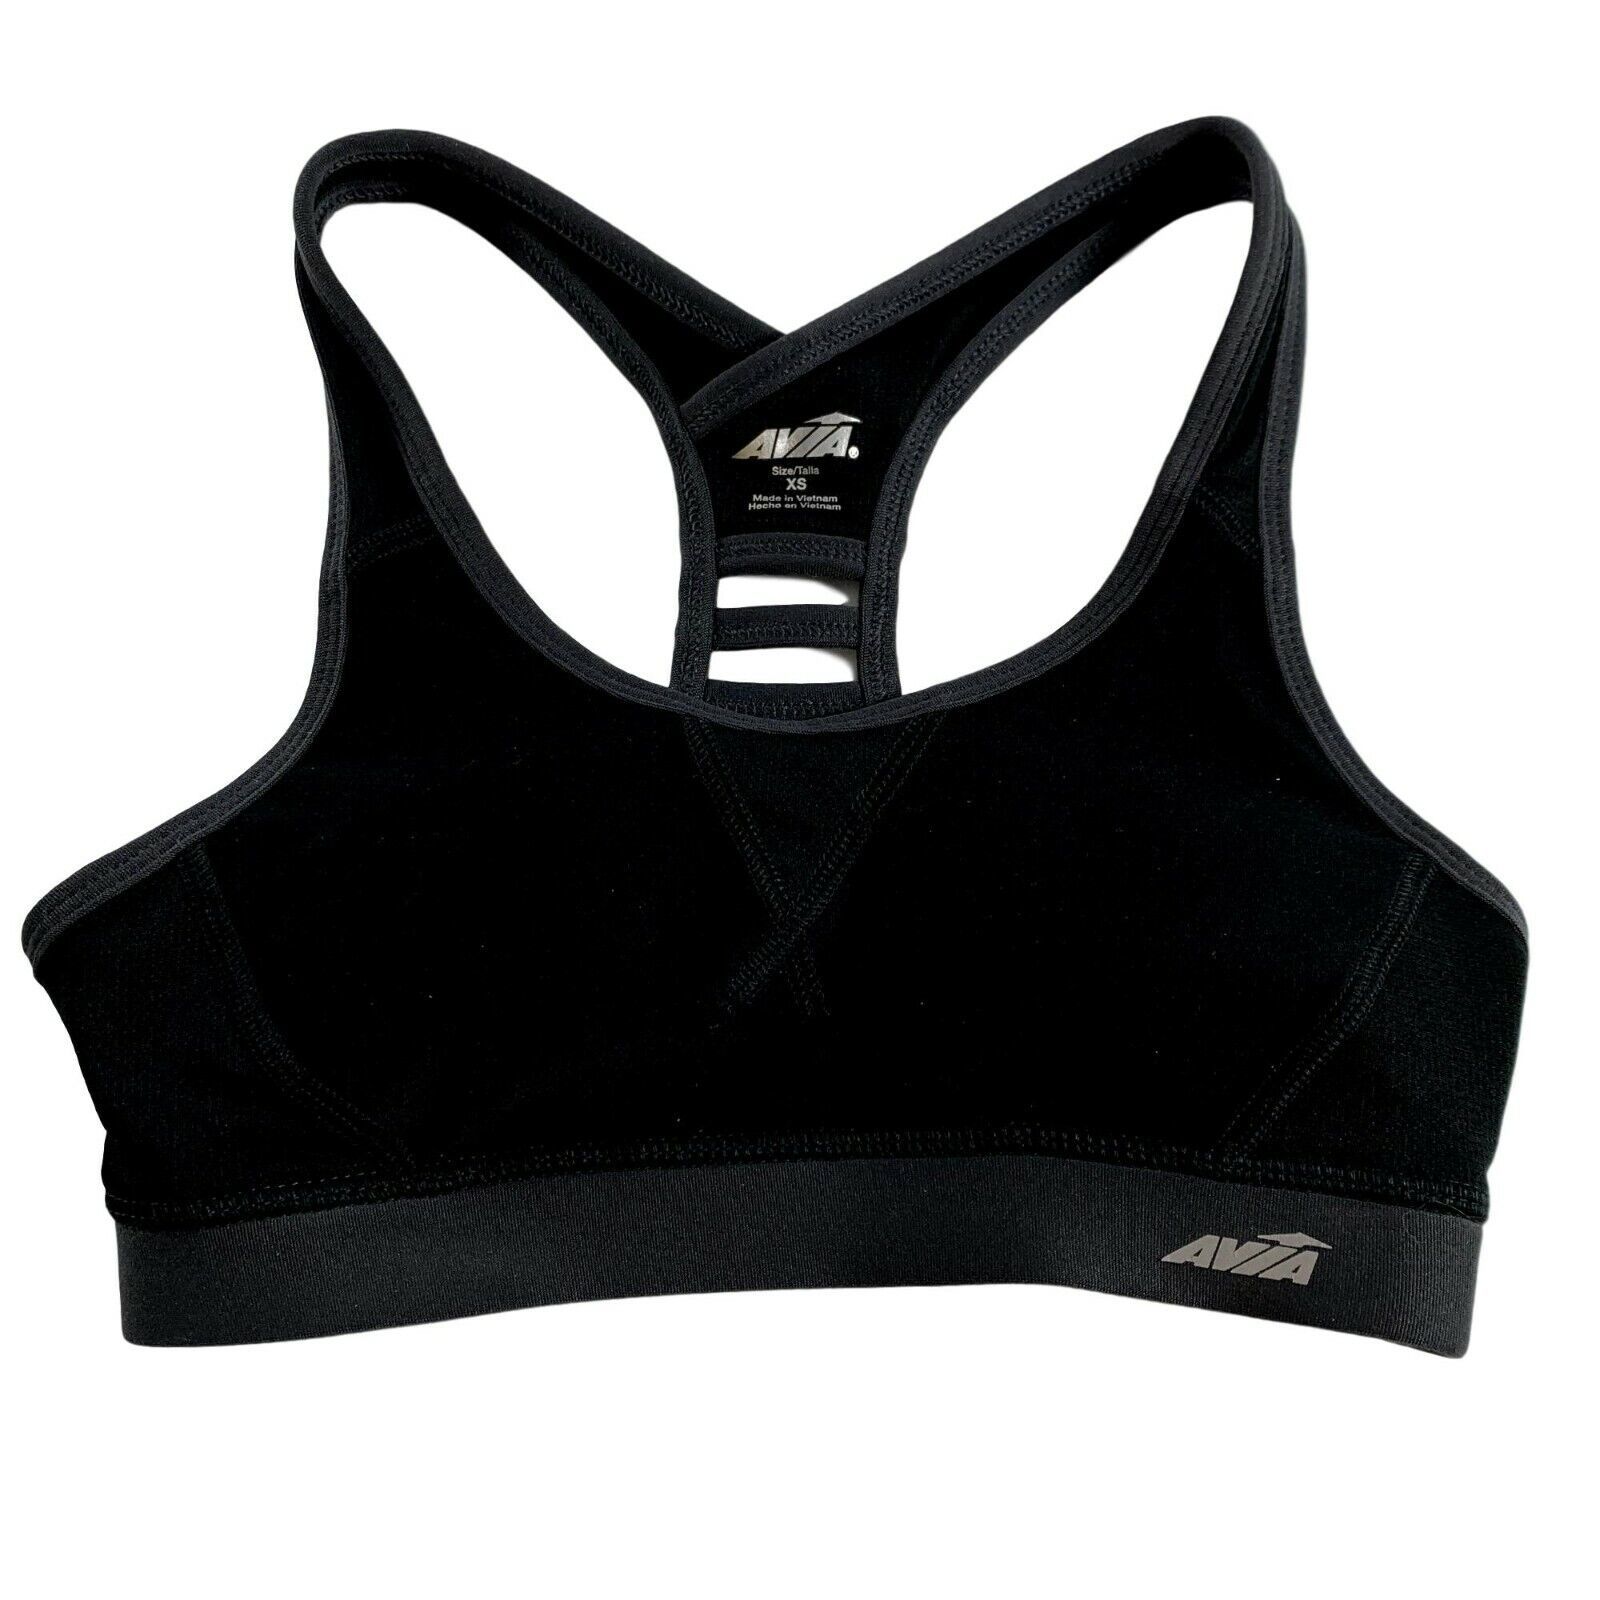 Primary image for Avia Womens Sports Bra Size XS Black Strappy Razorback Lightly Padded